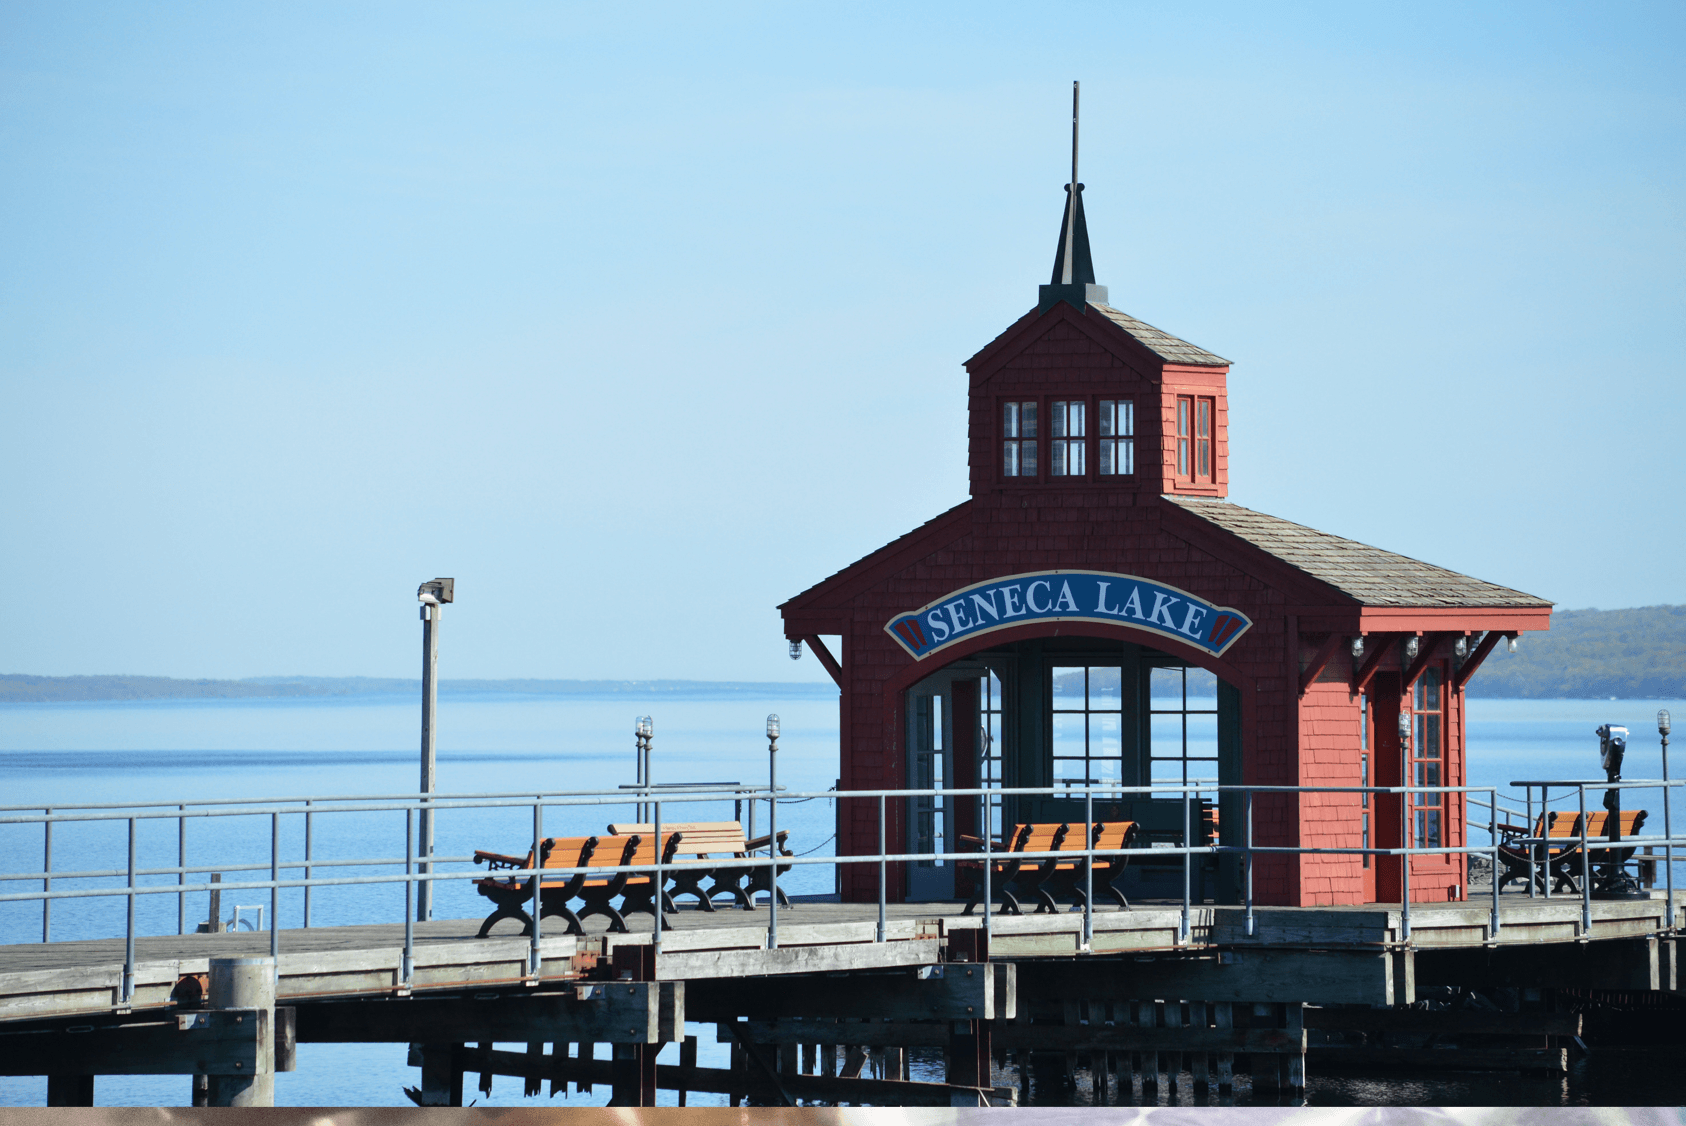 The Seneca Lake Pier on a beautiful summer day